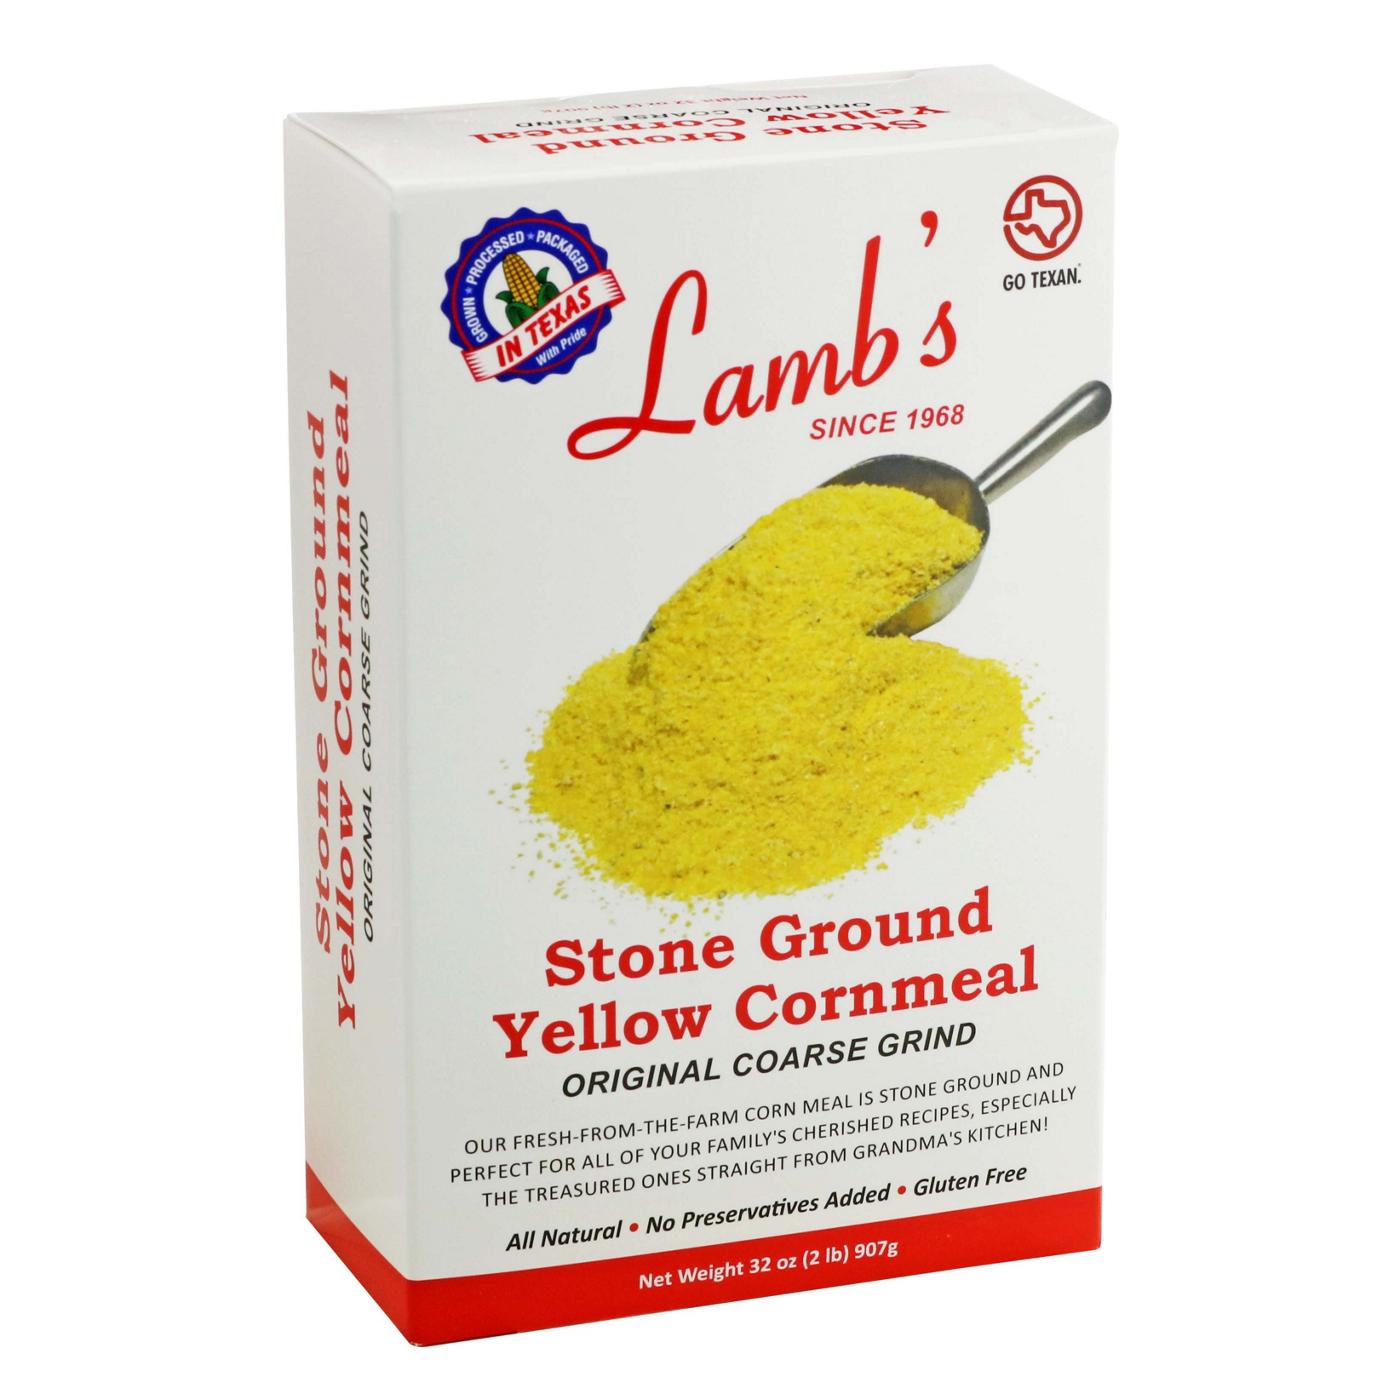 Lamb's Stone Ground Yellow Corn Meal; image 1 of 2